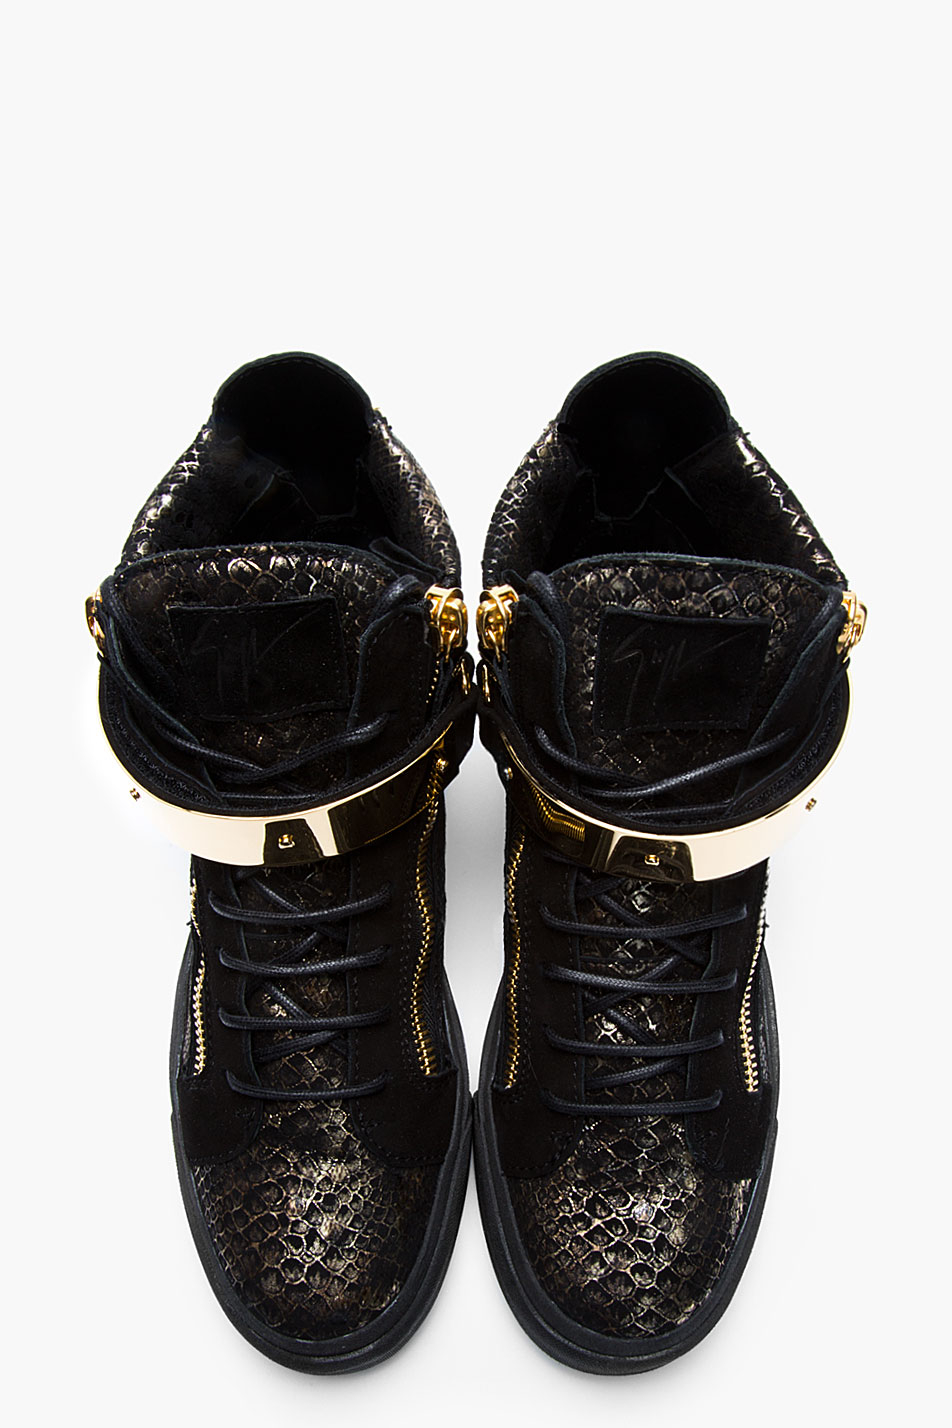 Giuseppe Zanotti Black and Gold Printed Python London Sneakers for Men ...